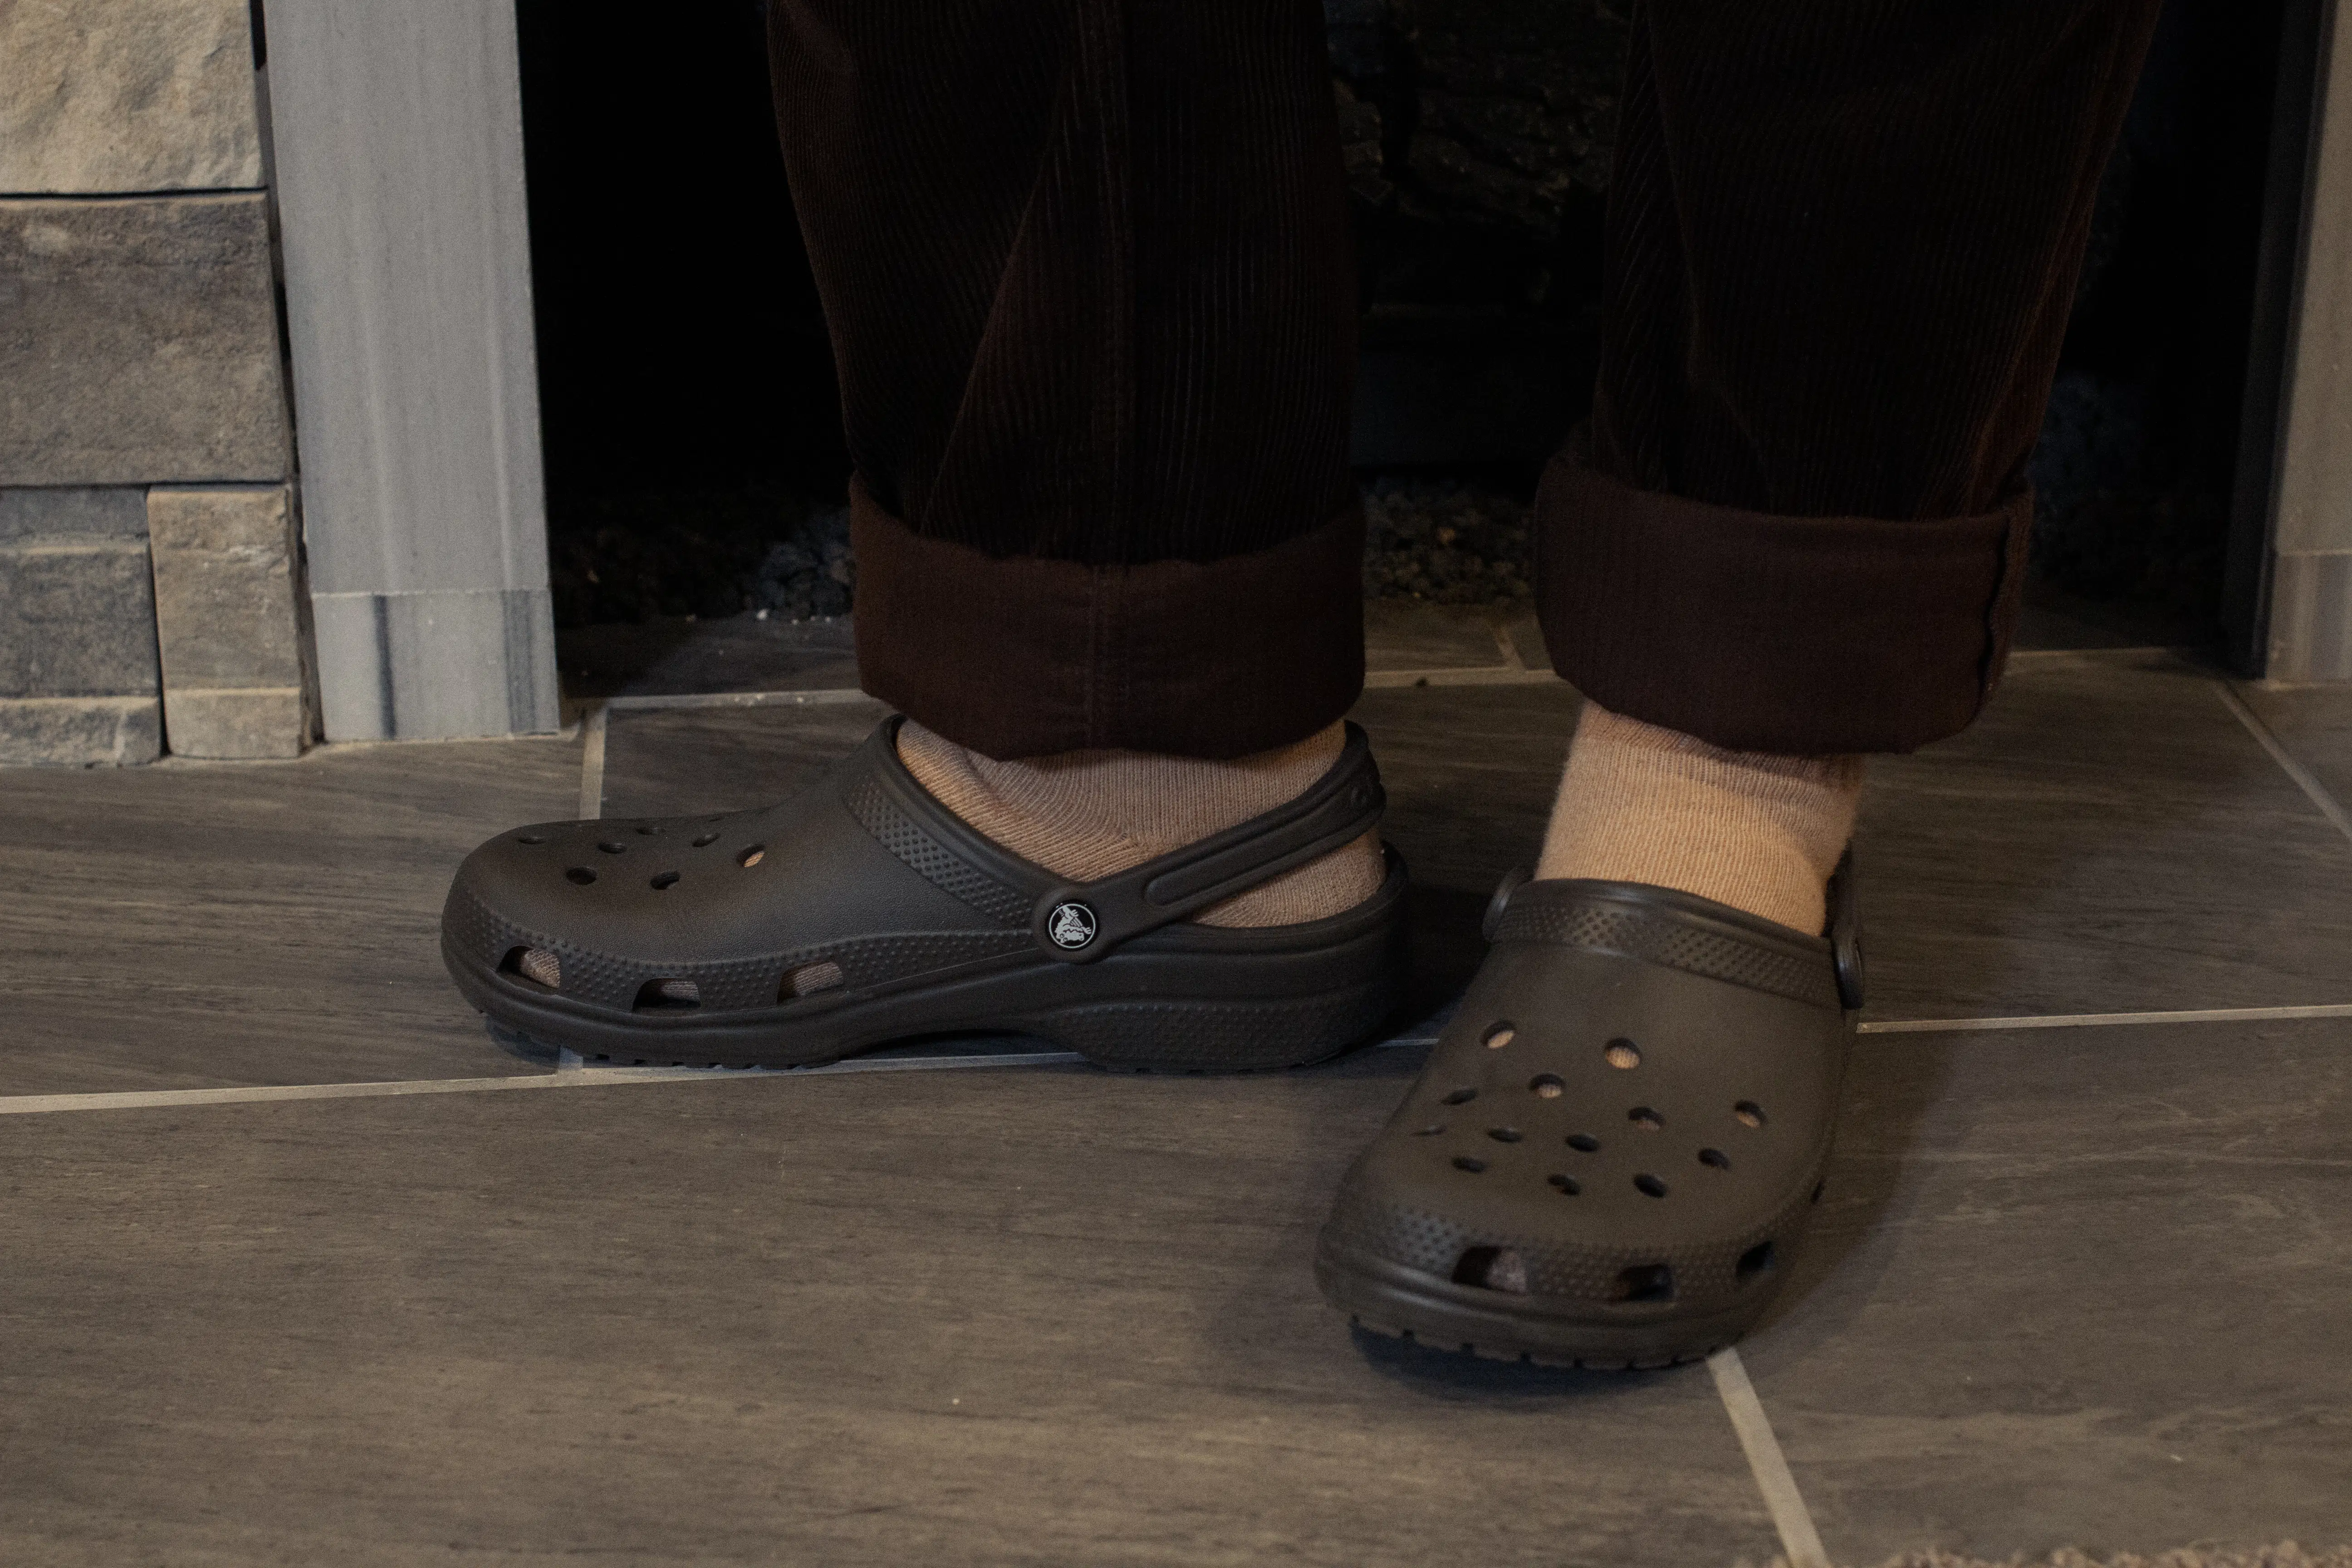 Crocs shoes with socks